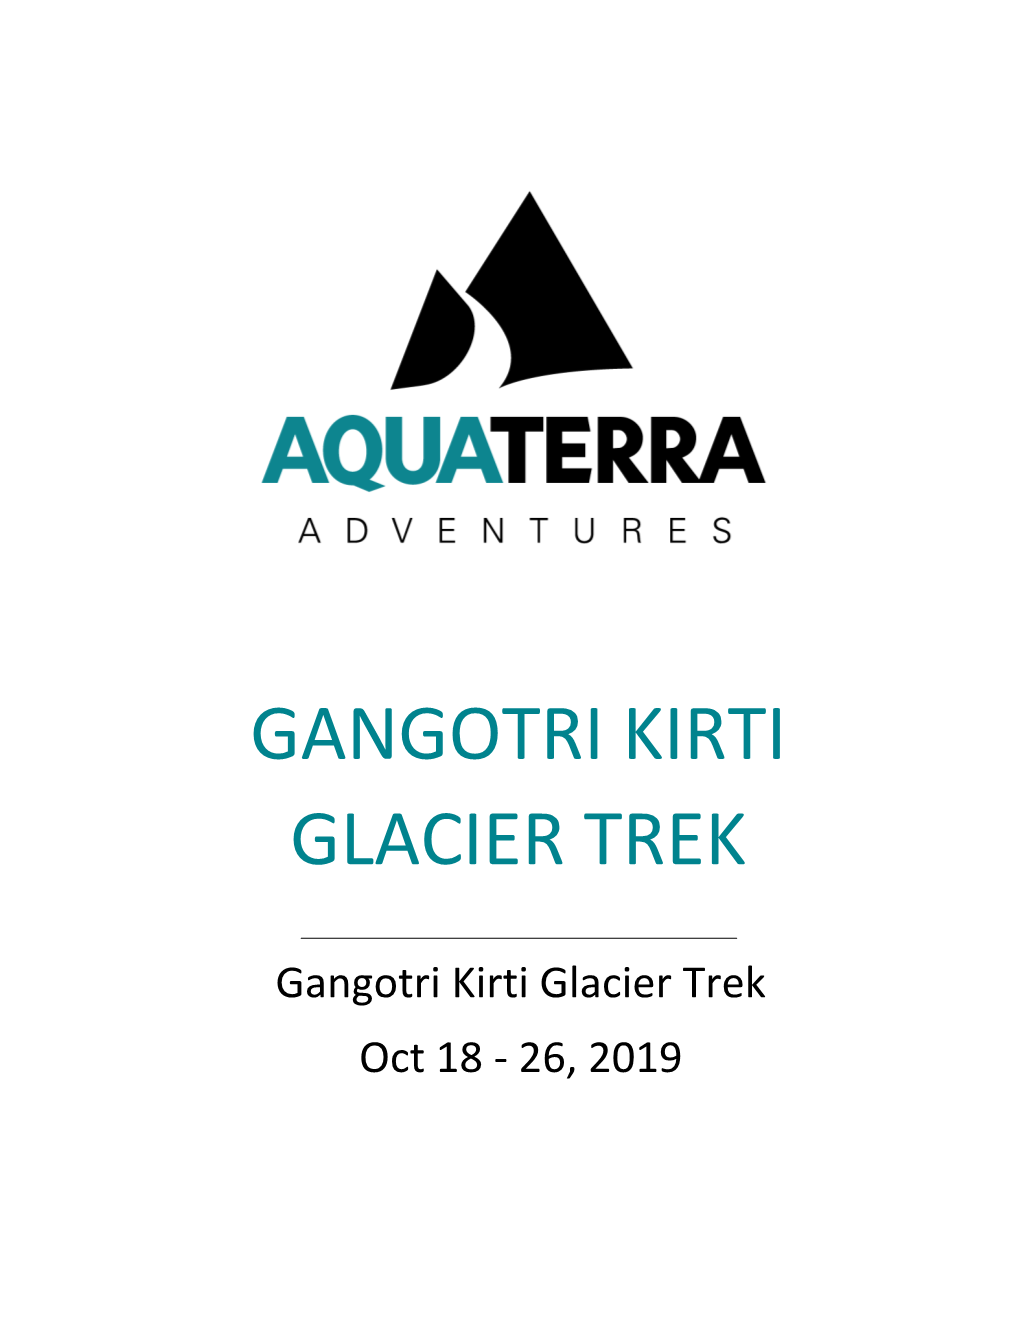 Gangotri Kirti Glacier Trek Oct 18 - 26, 2019